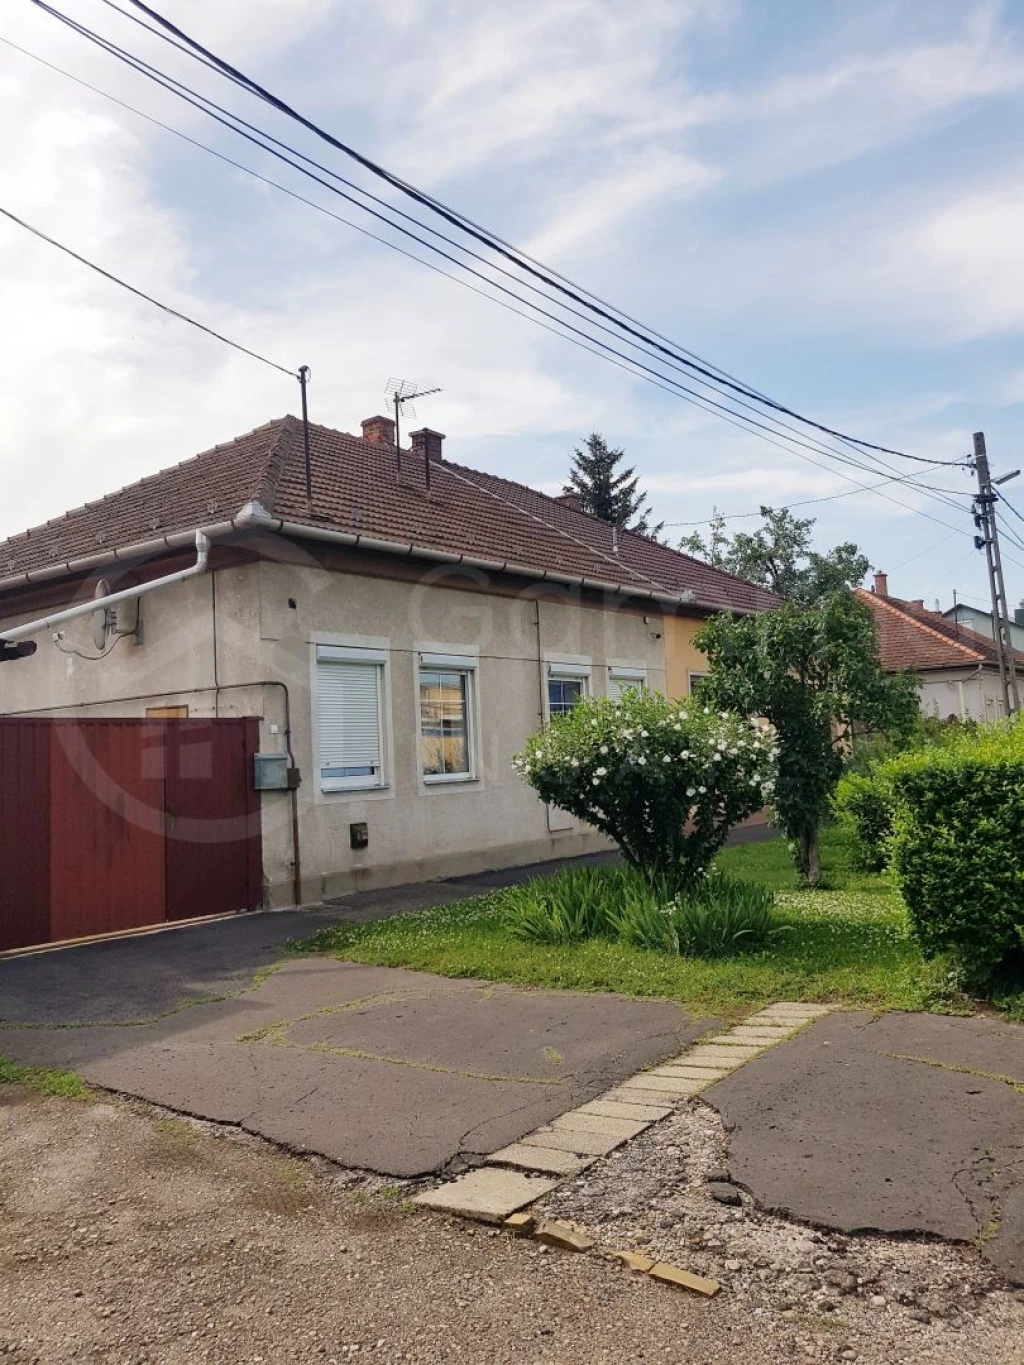 For sale house, Miskolc, Selyemrét